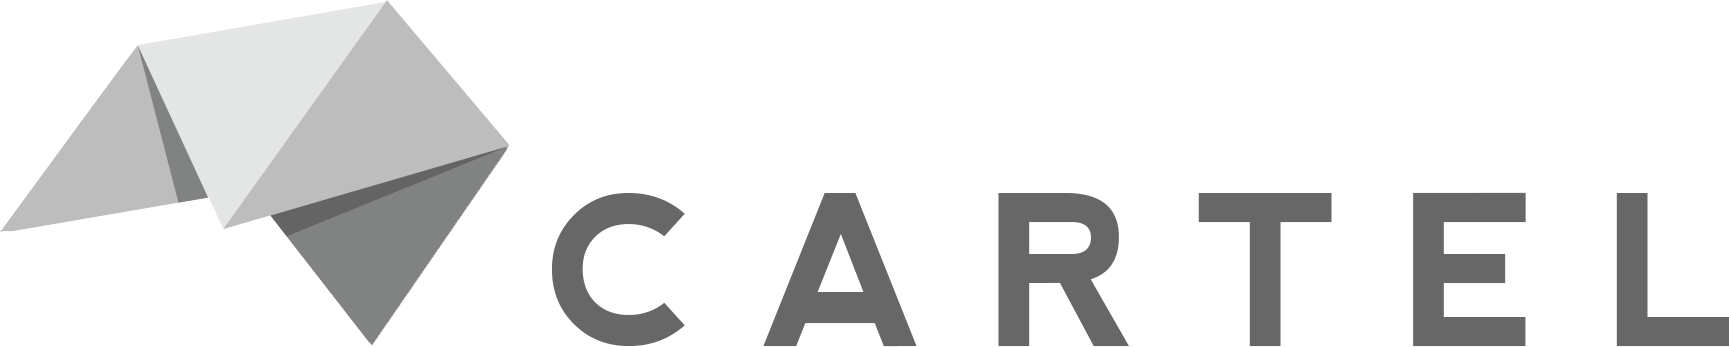 The Cartel Logo